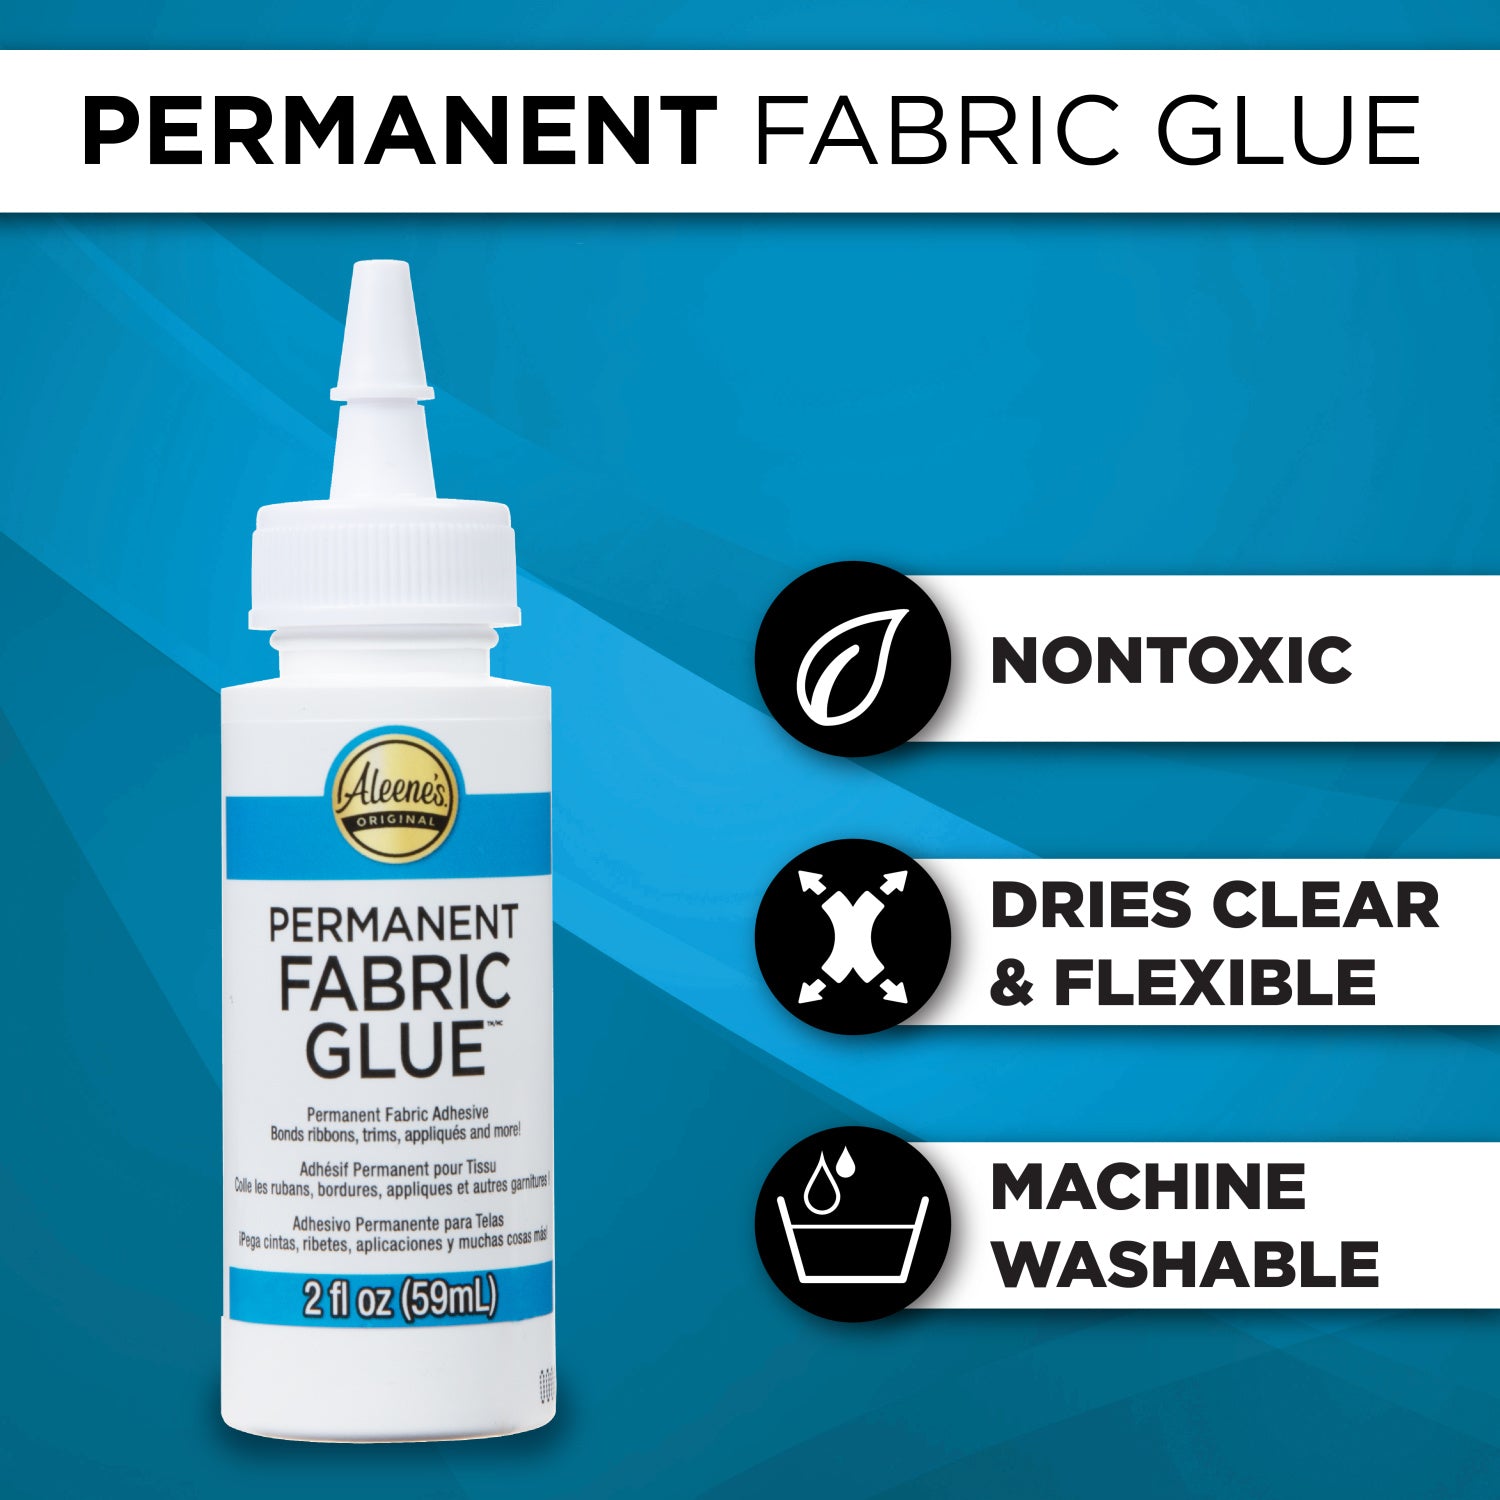 Aleene’s Permanent Fabric Glue